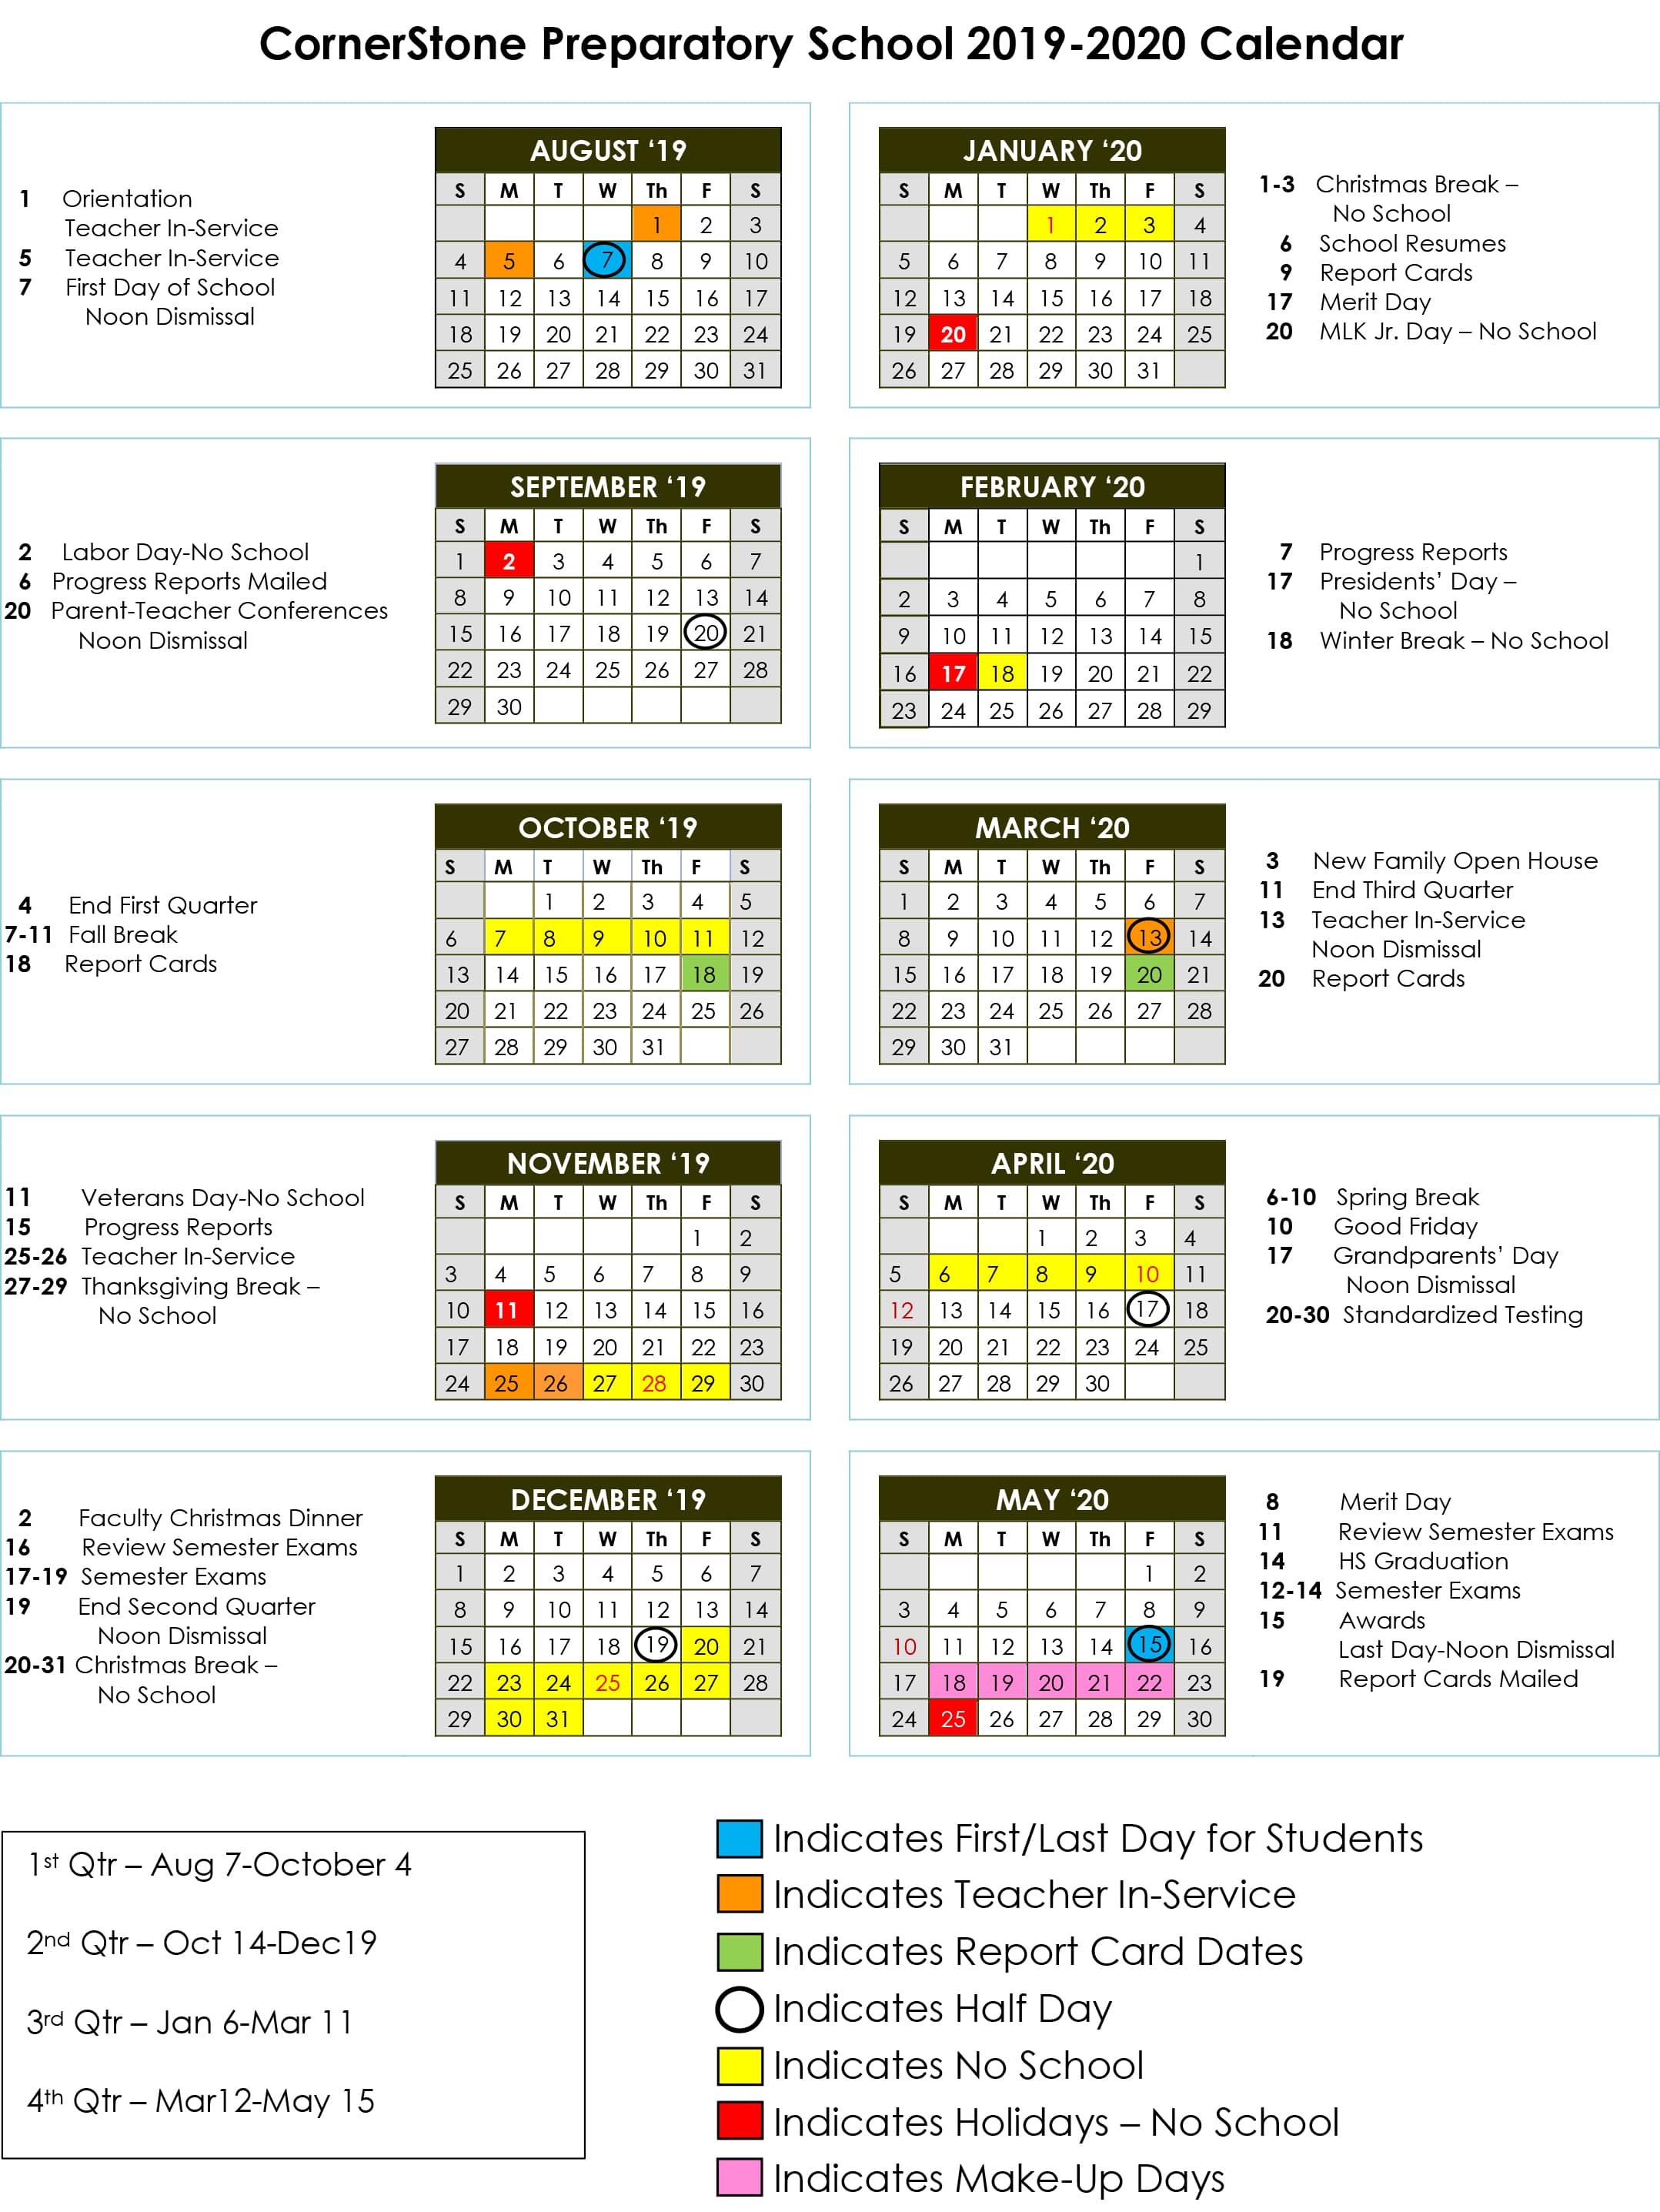 school-calendar-cornerstone-prep-school